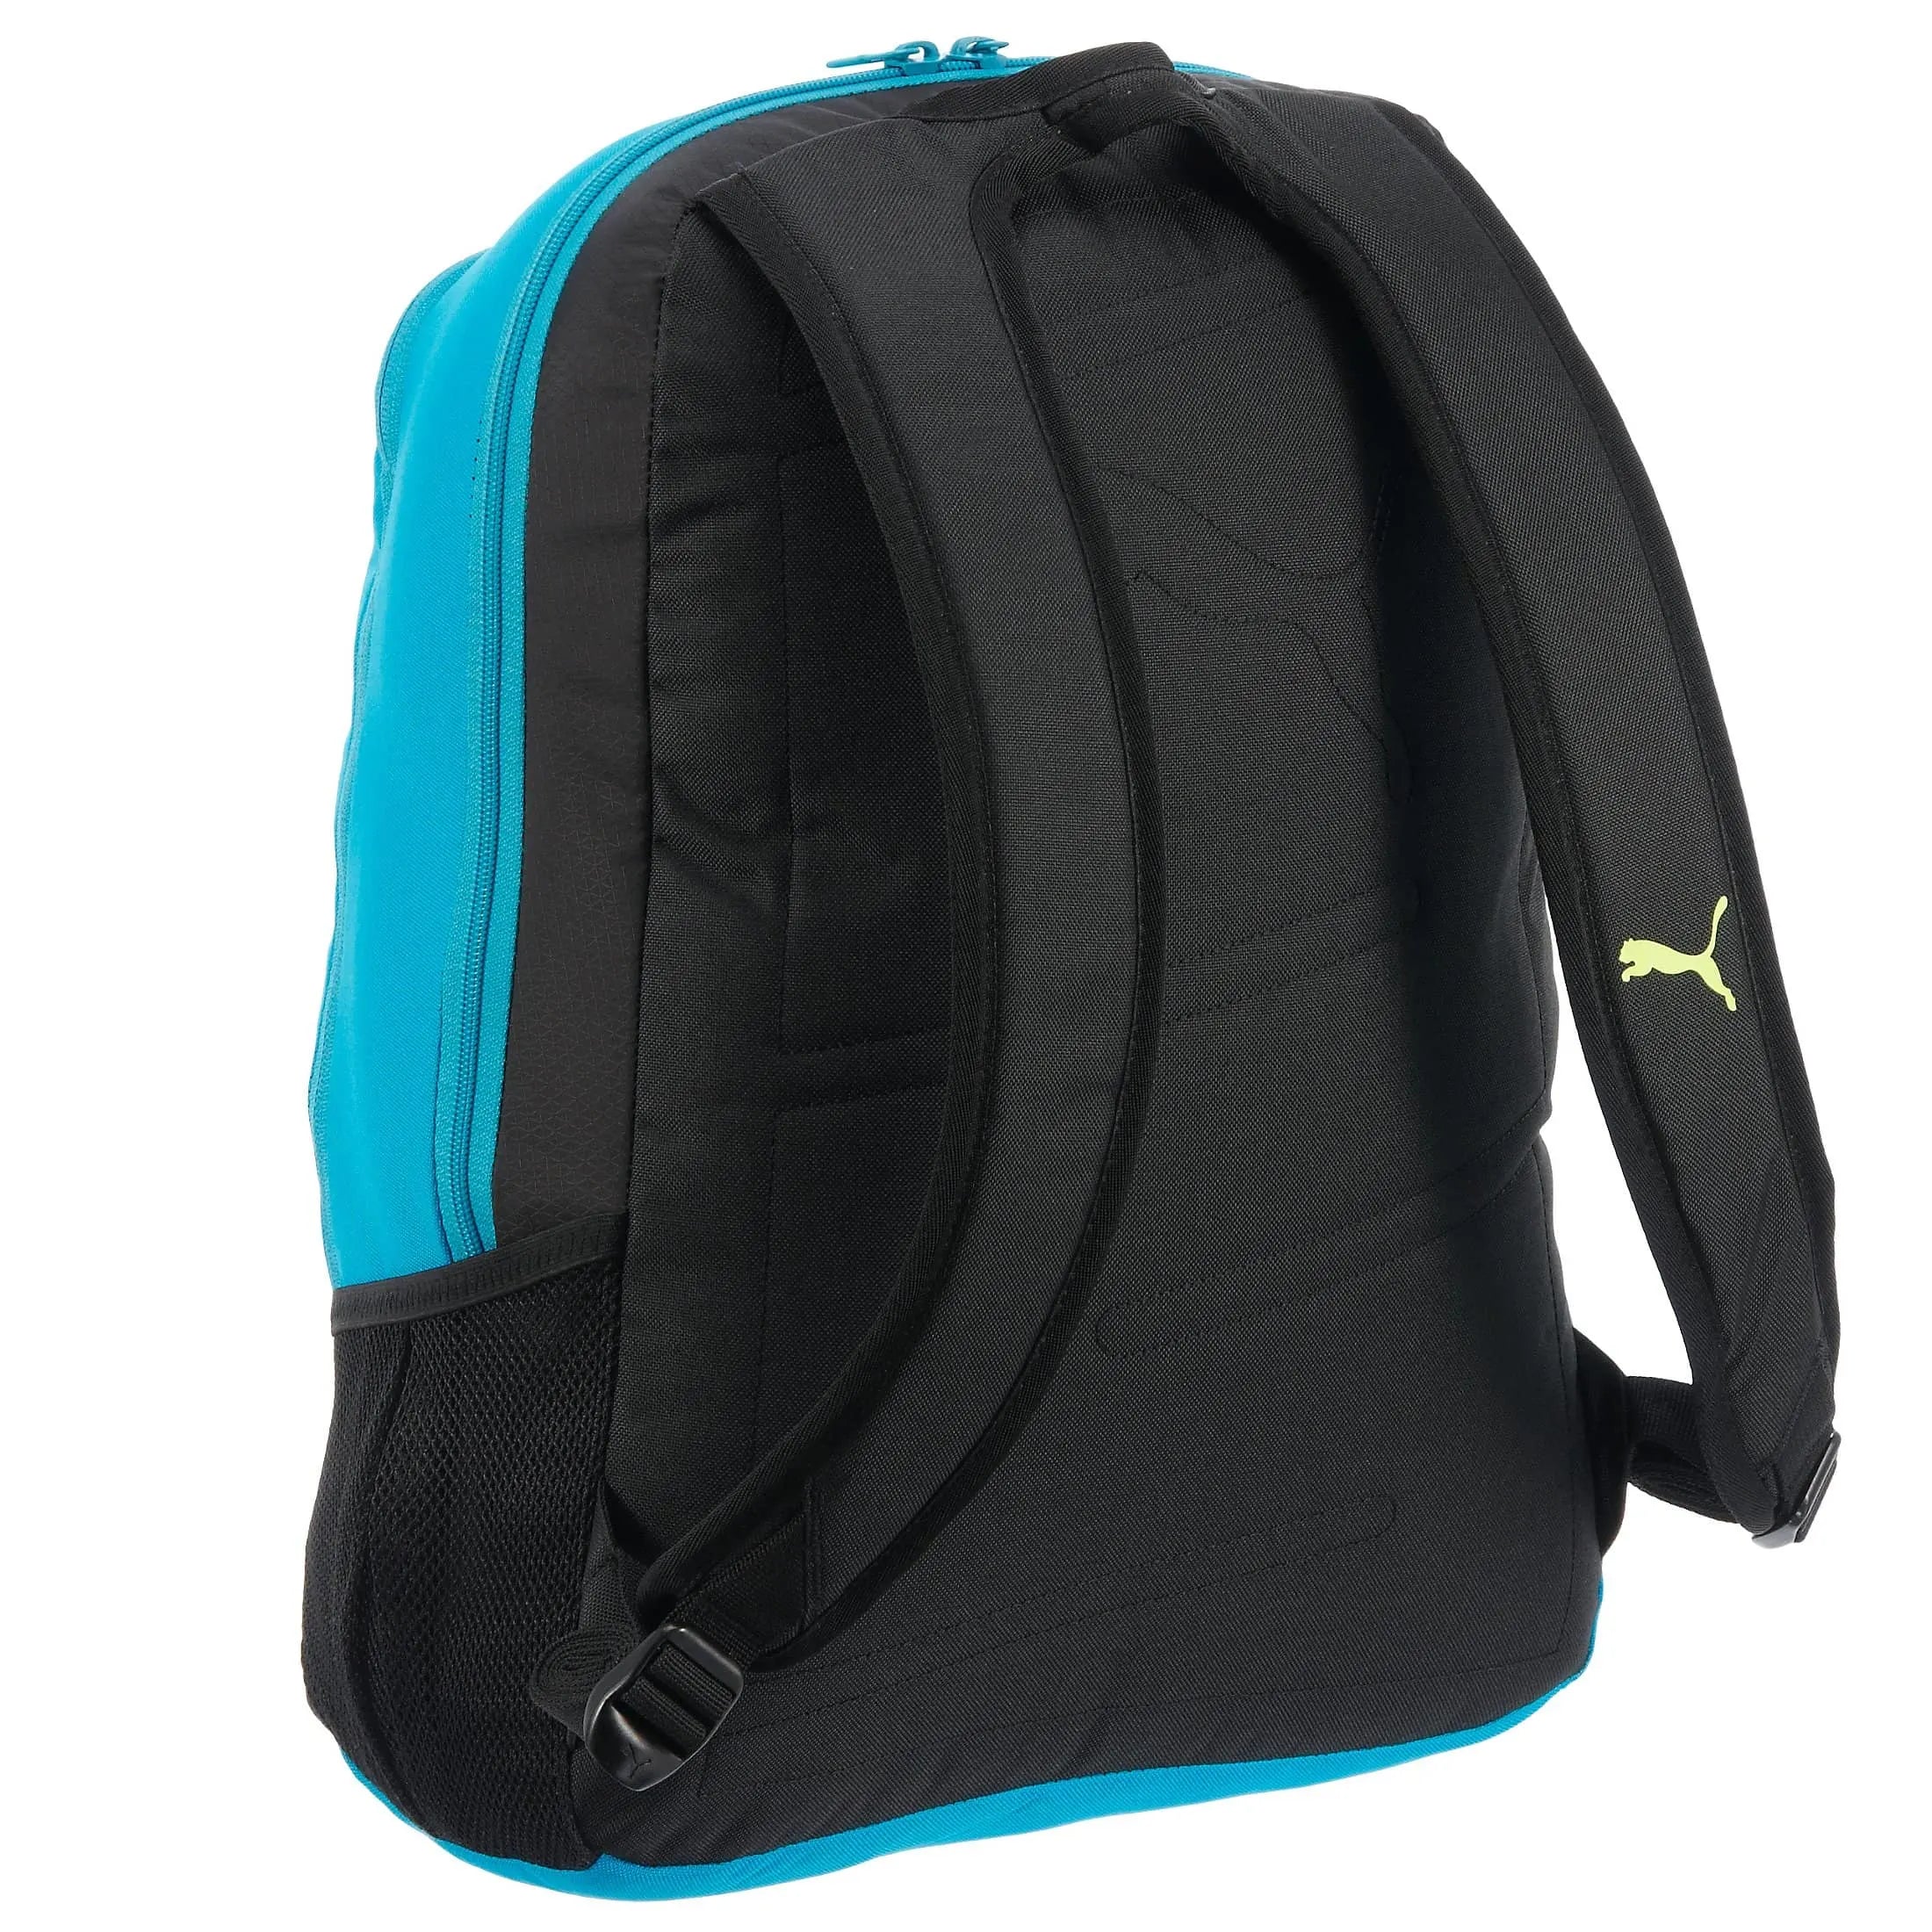 Puma evoPOWER Football Backpack Sac à dos 48 cm - bleu-noir-blanc